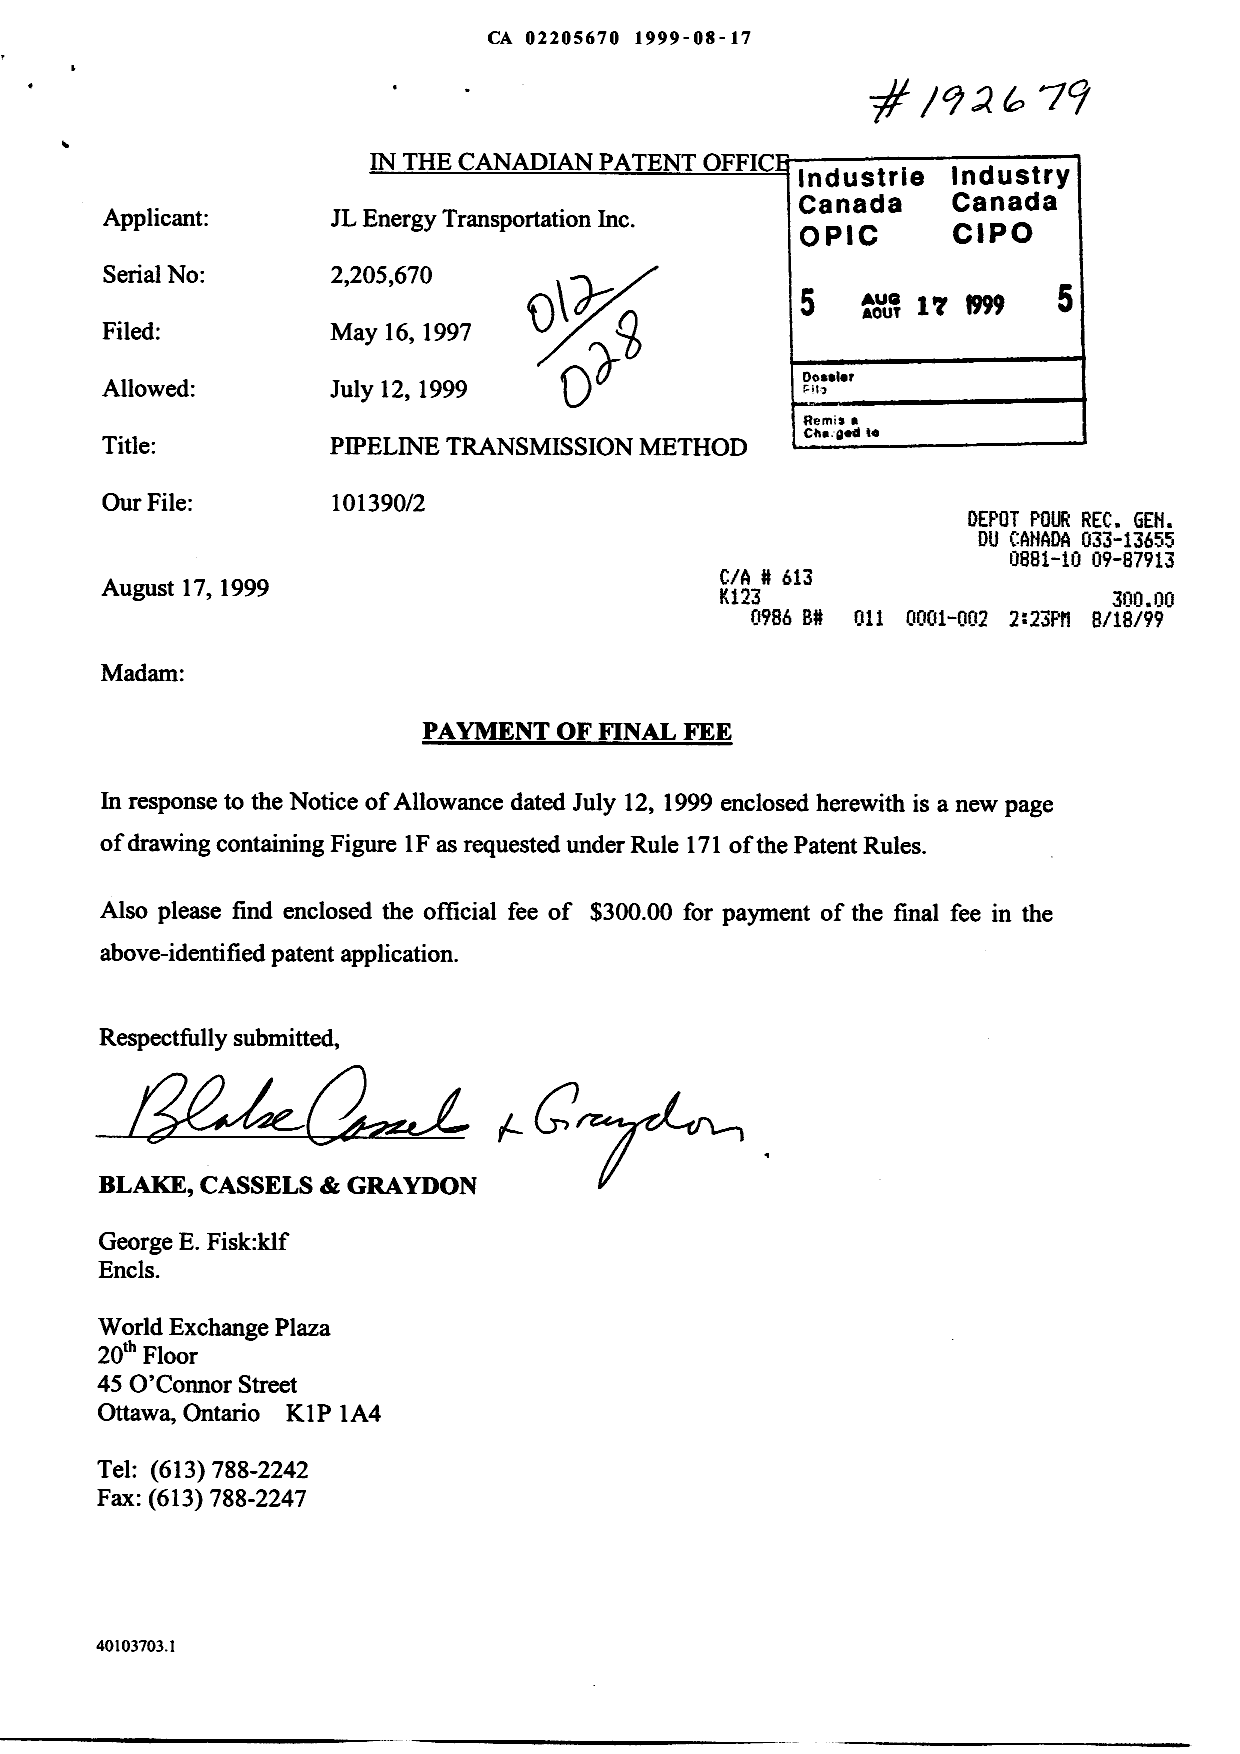 Canadian Patent Document 2205670. Correspondence 19981217. Image 1 of 3